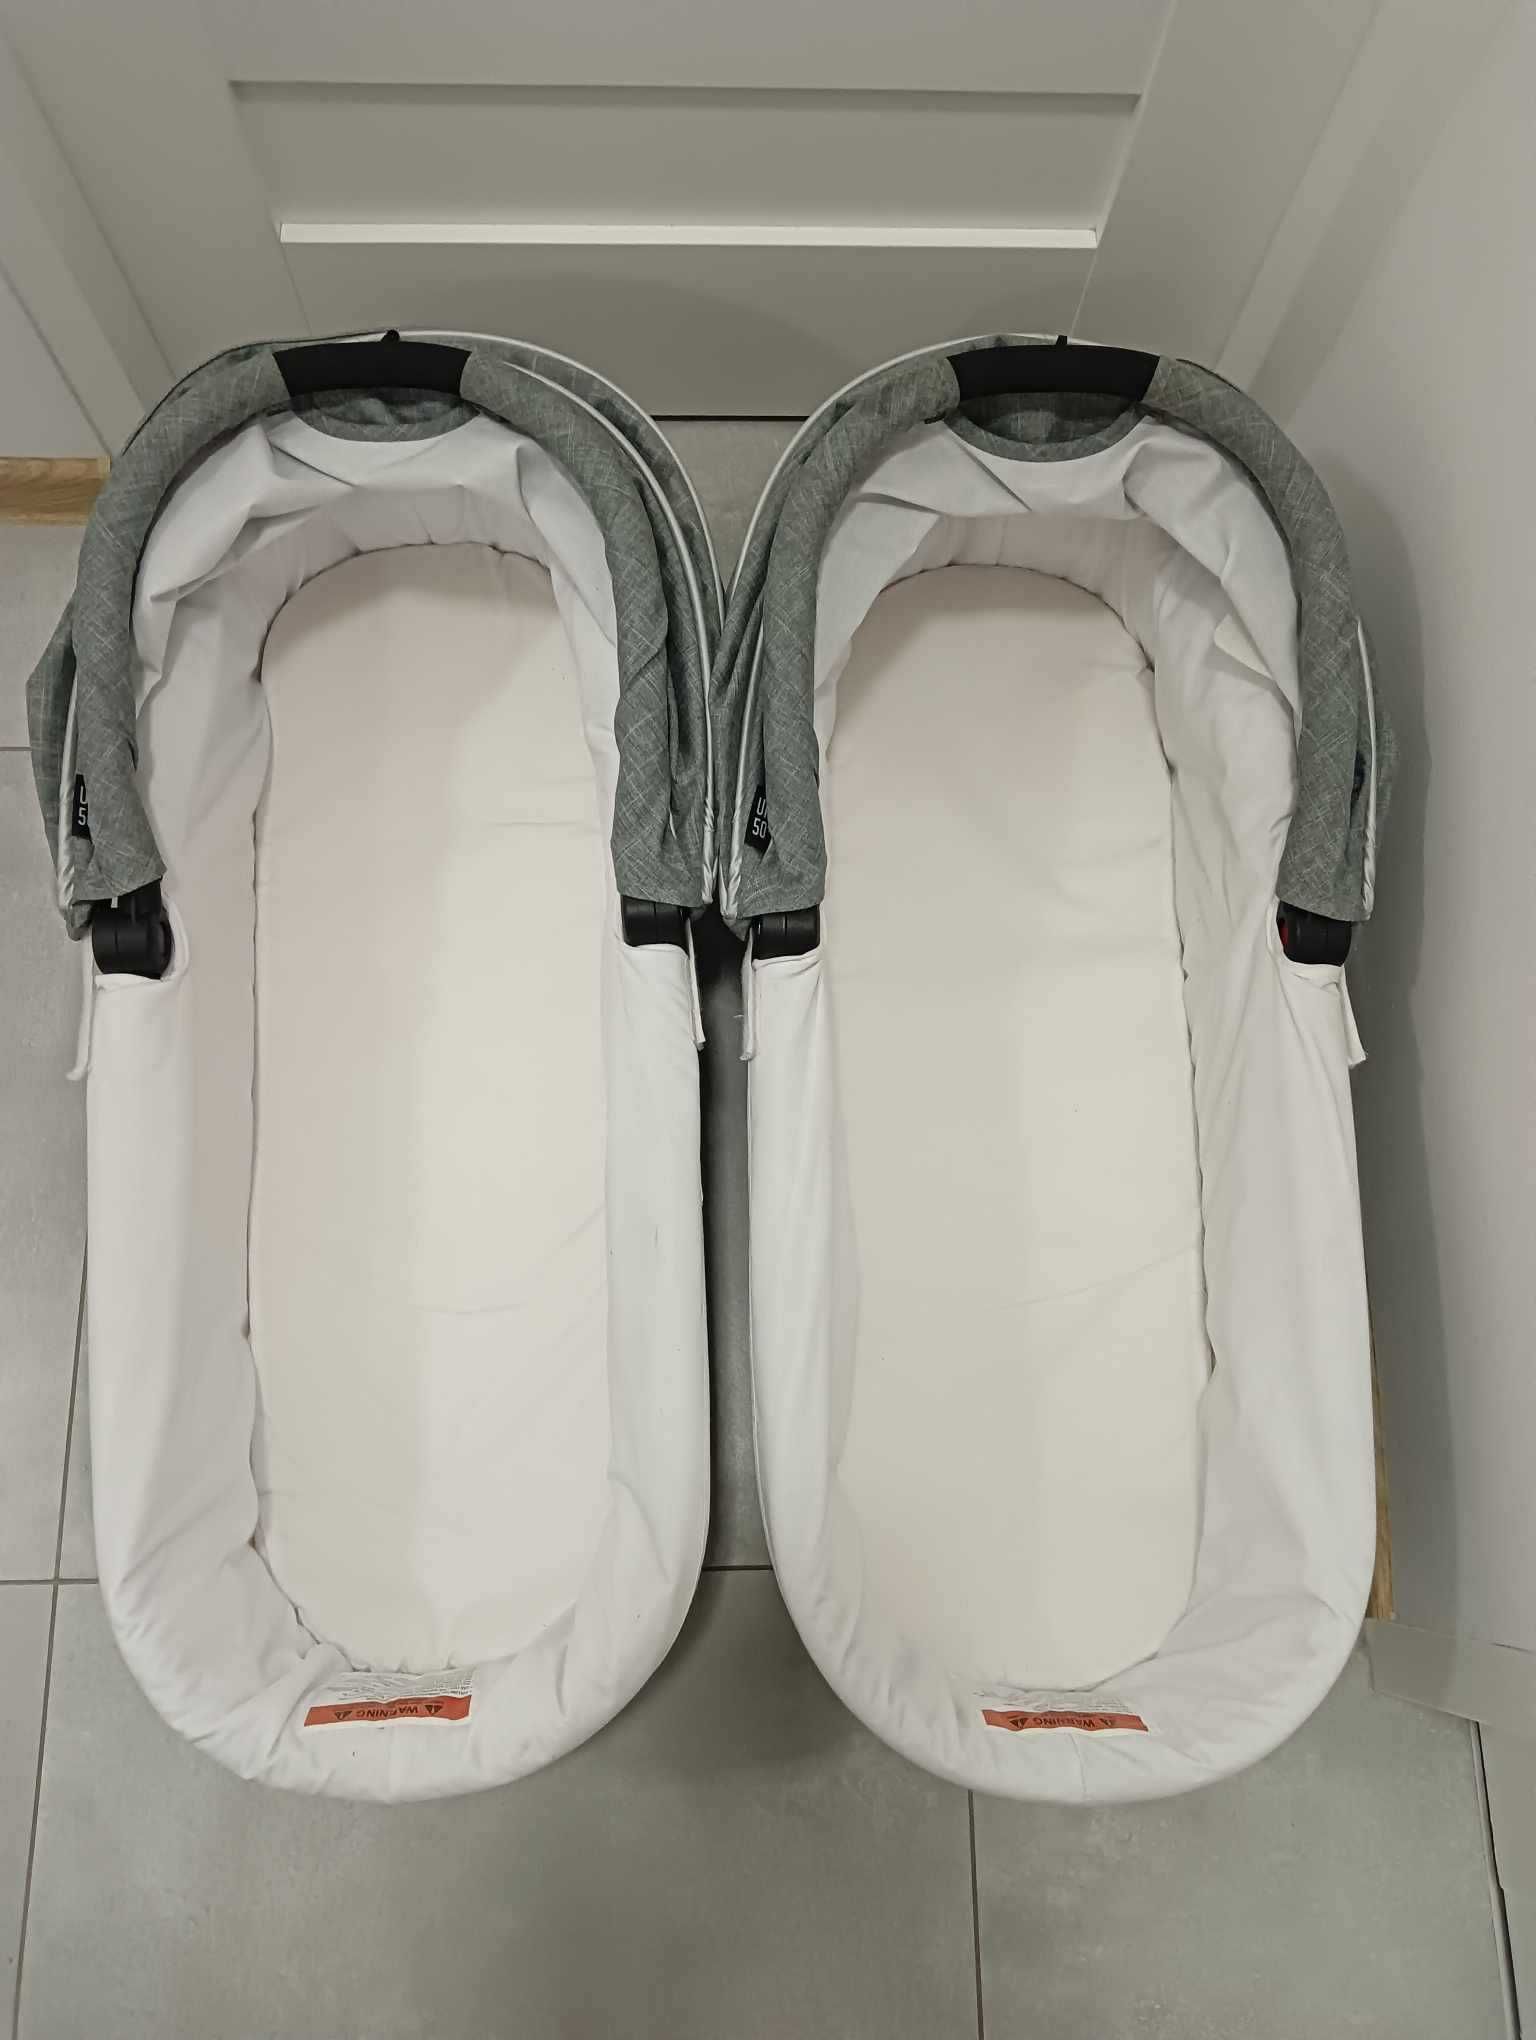 Gondola Valco Baby Snap Duo External